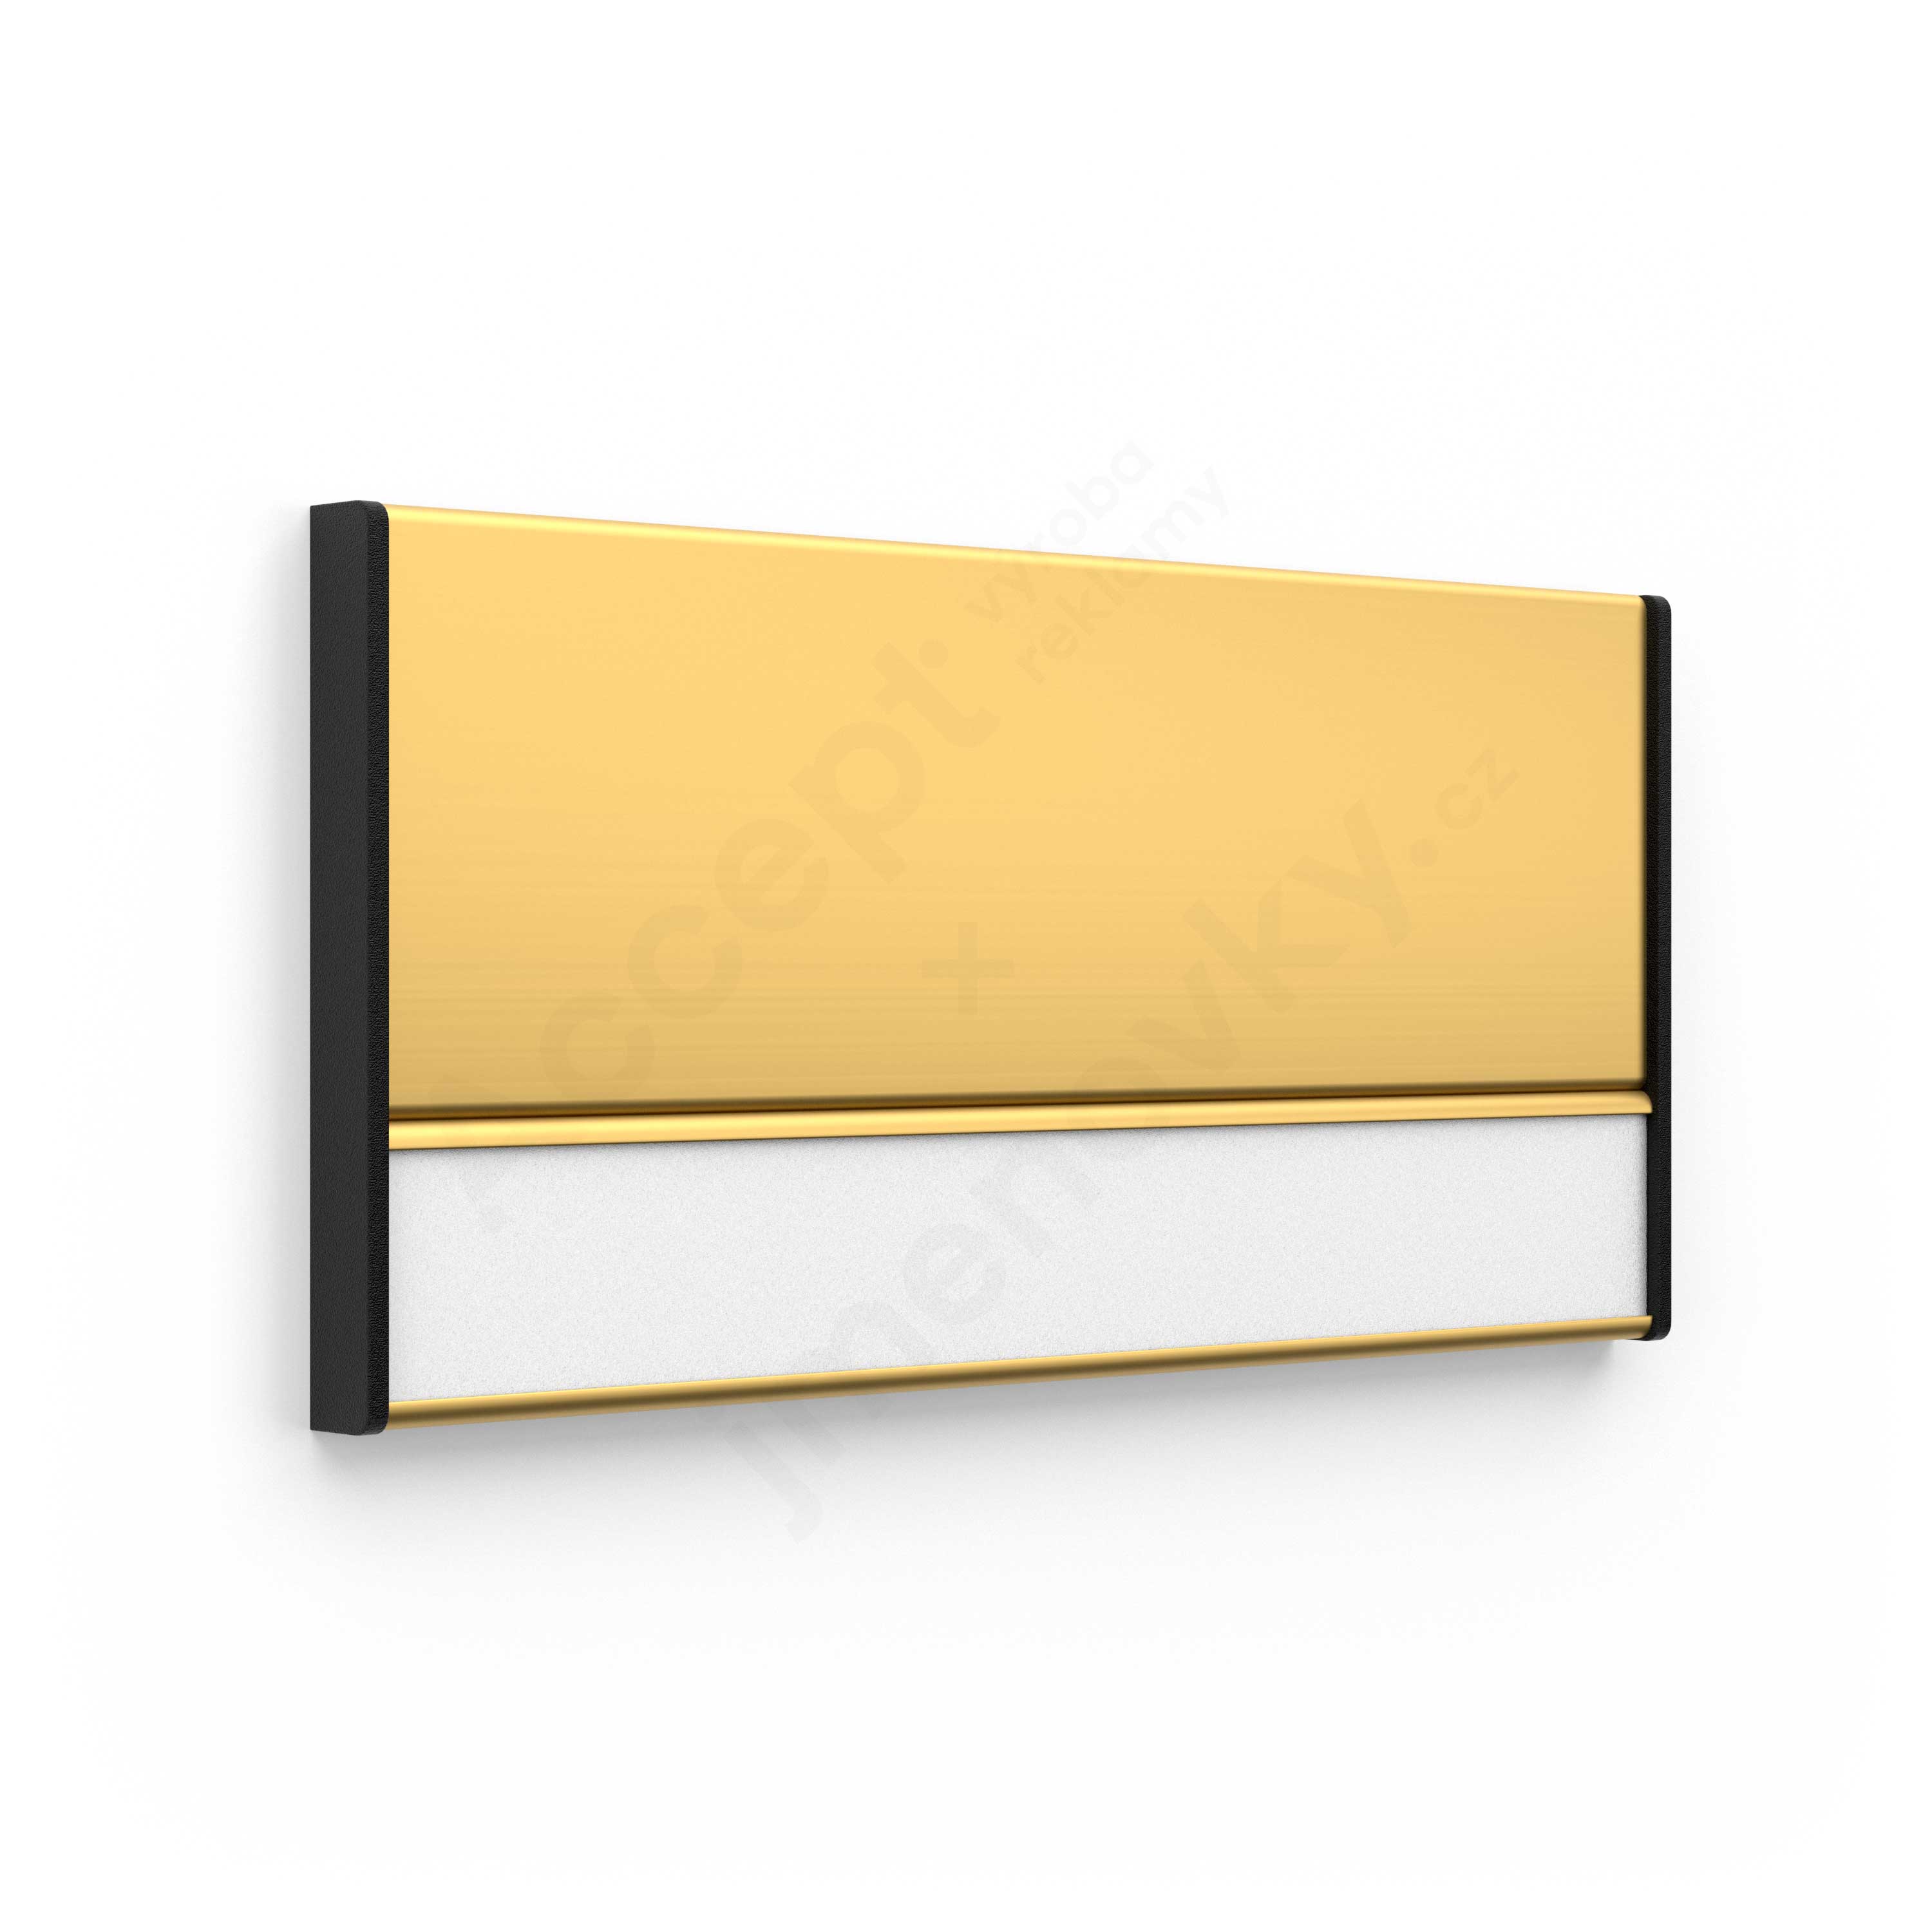 Dveřní tabulka ACS zlatá (kombinovaný systém, 187 x 93 mm)